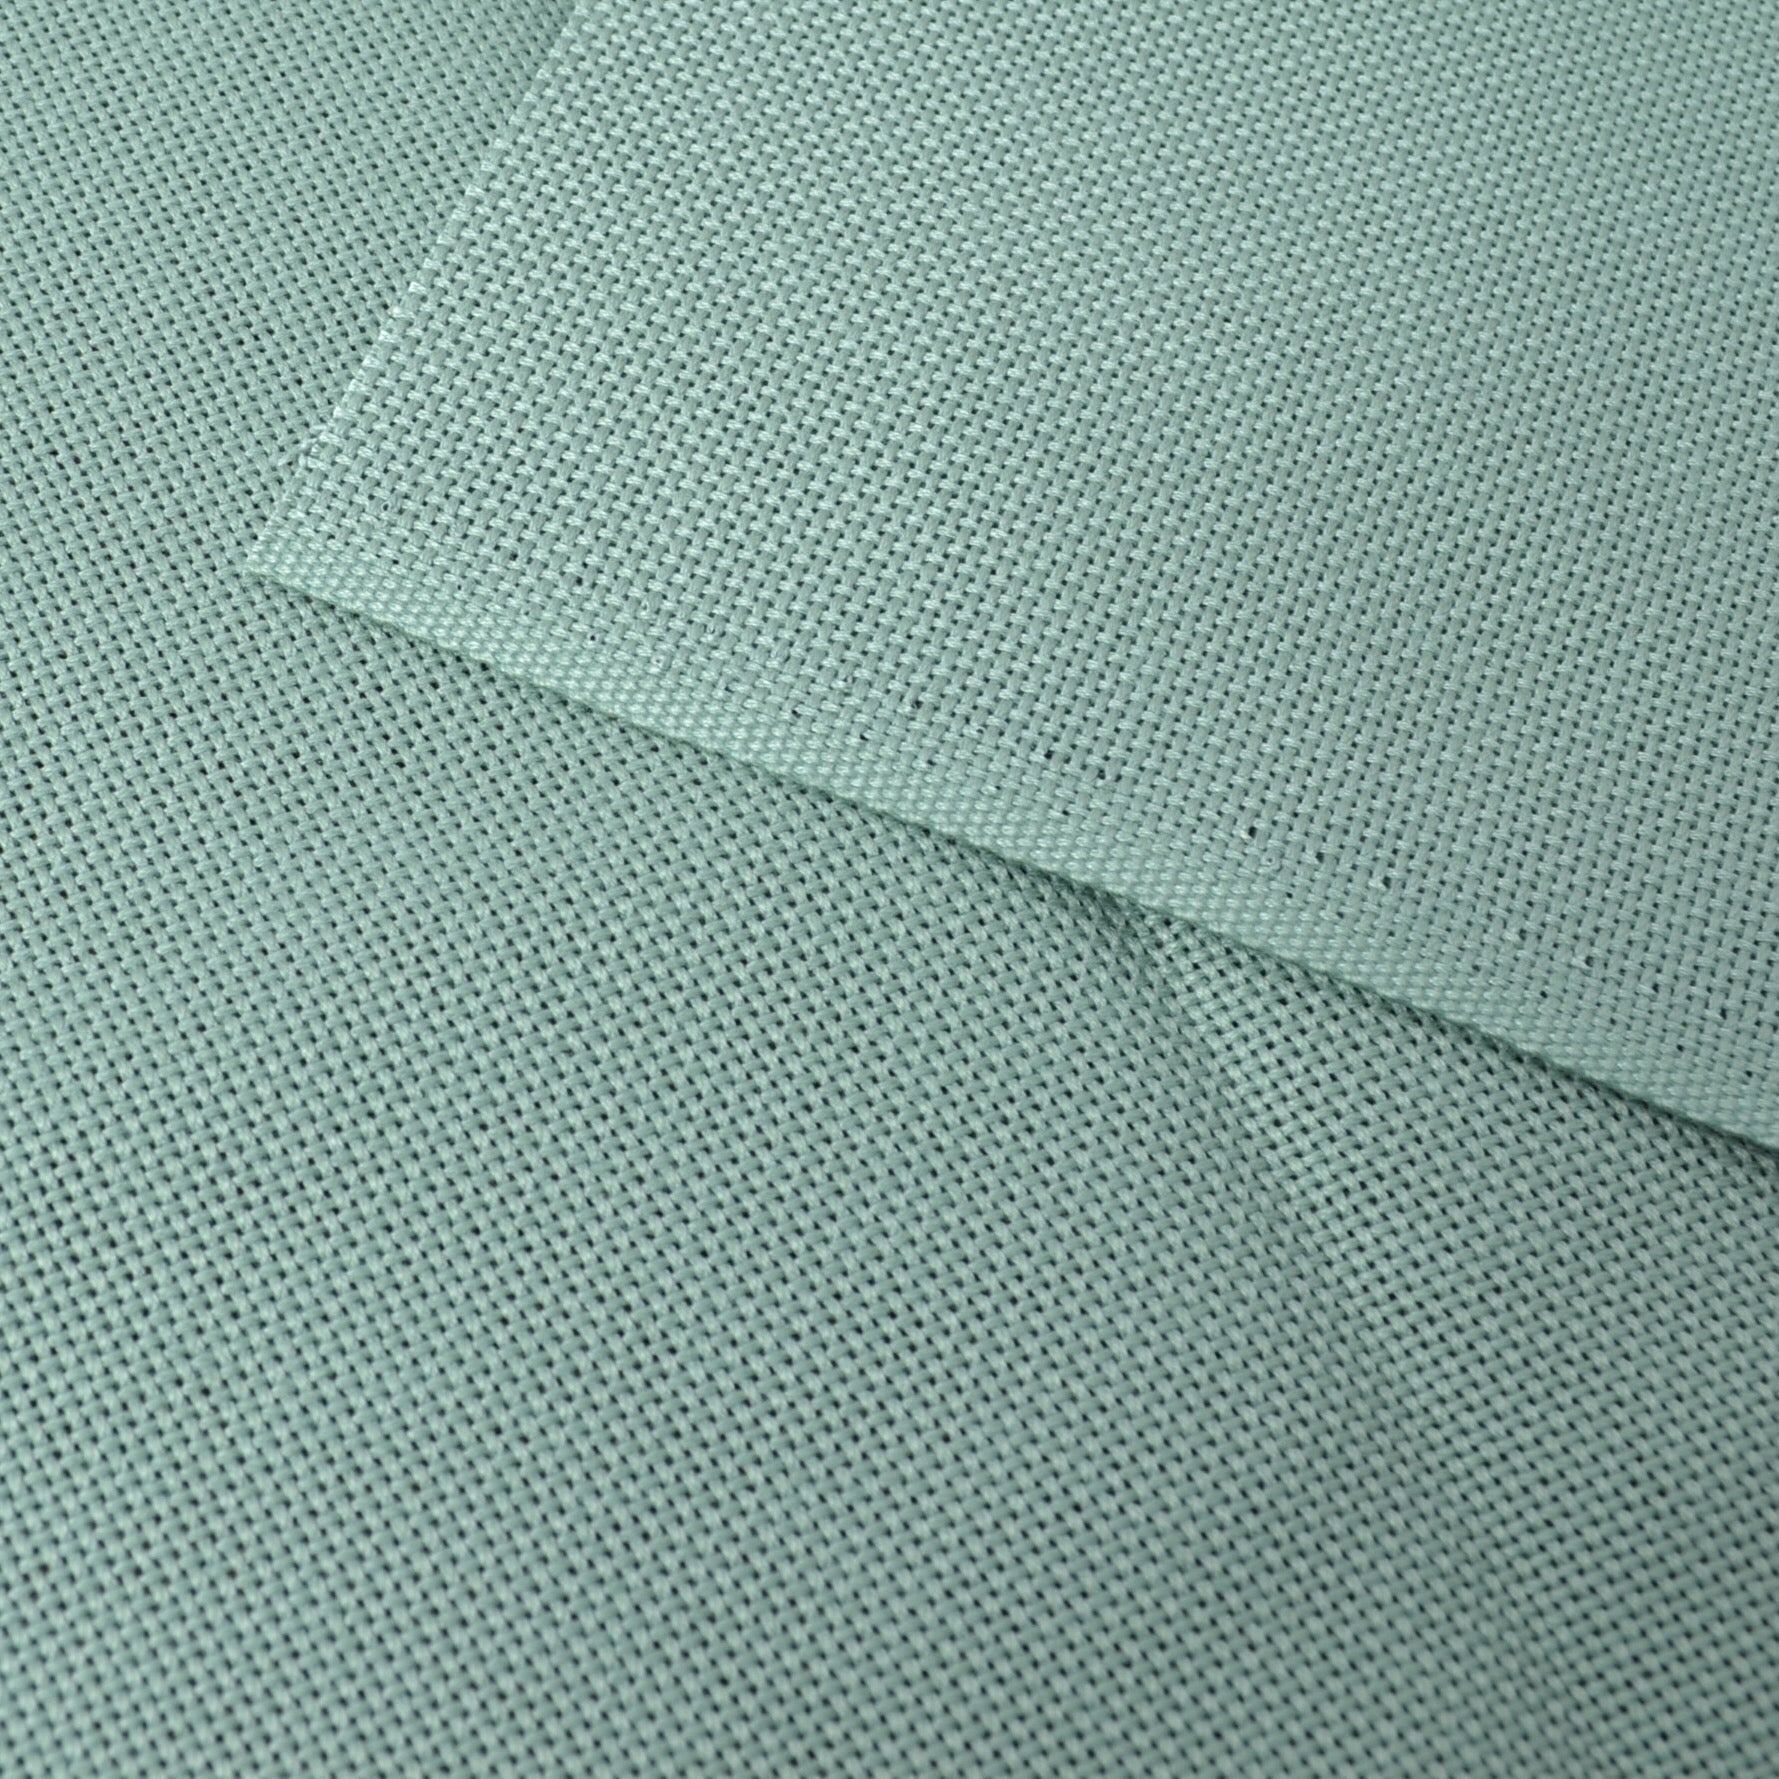 Kogin Stitching, 18 Count Soft Green Congress Cloth